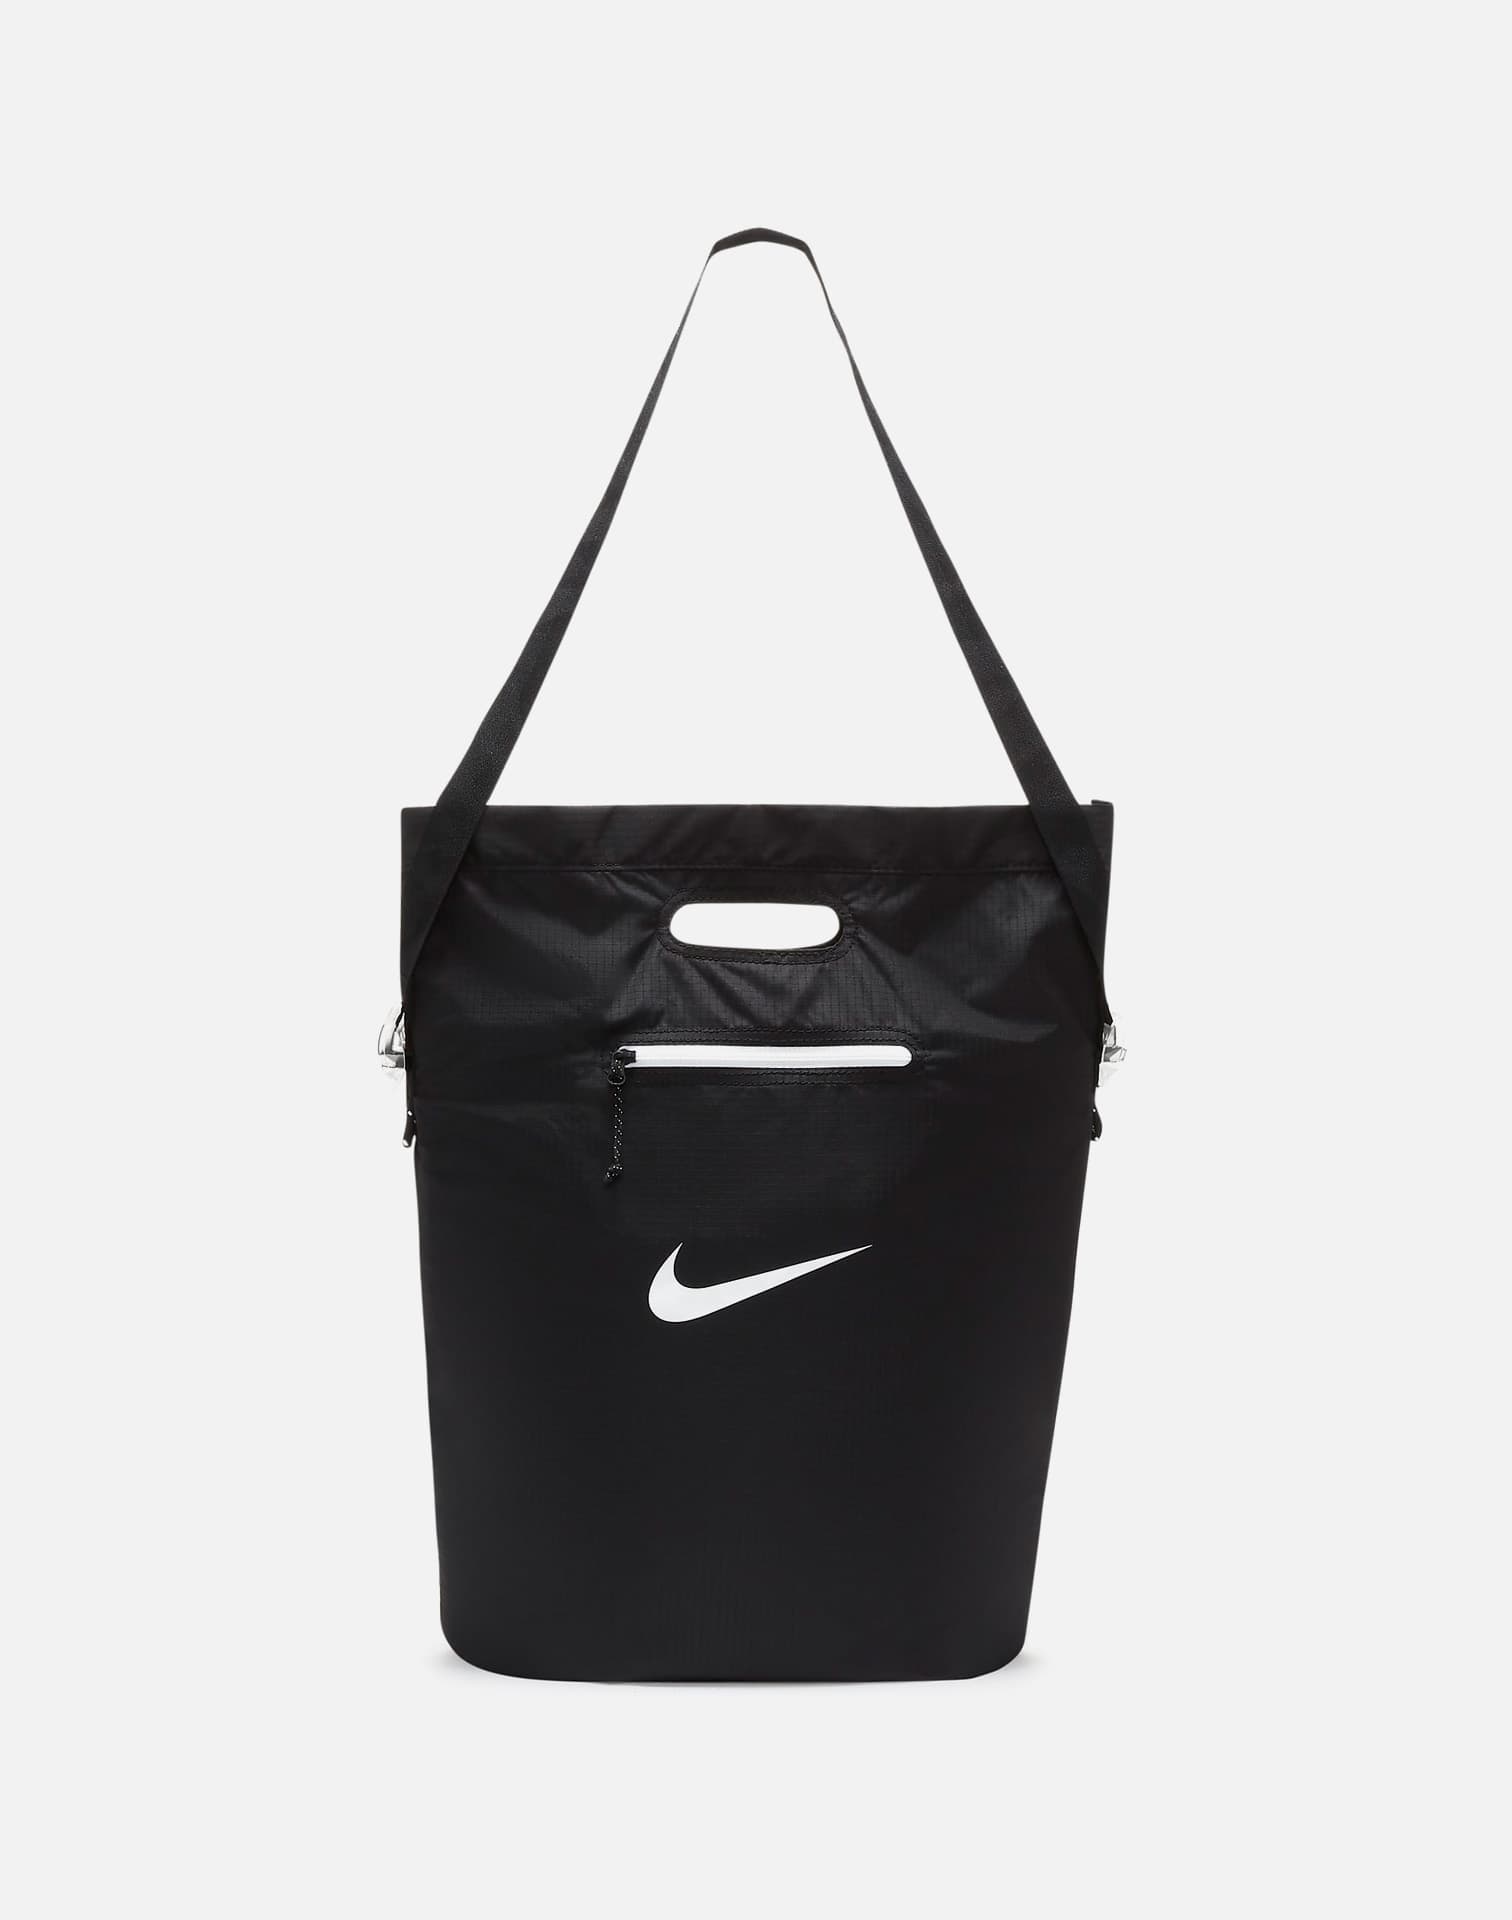 Nike HQ Address (Black) Tote Bag for Sale by fandomtshirtss